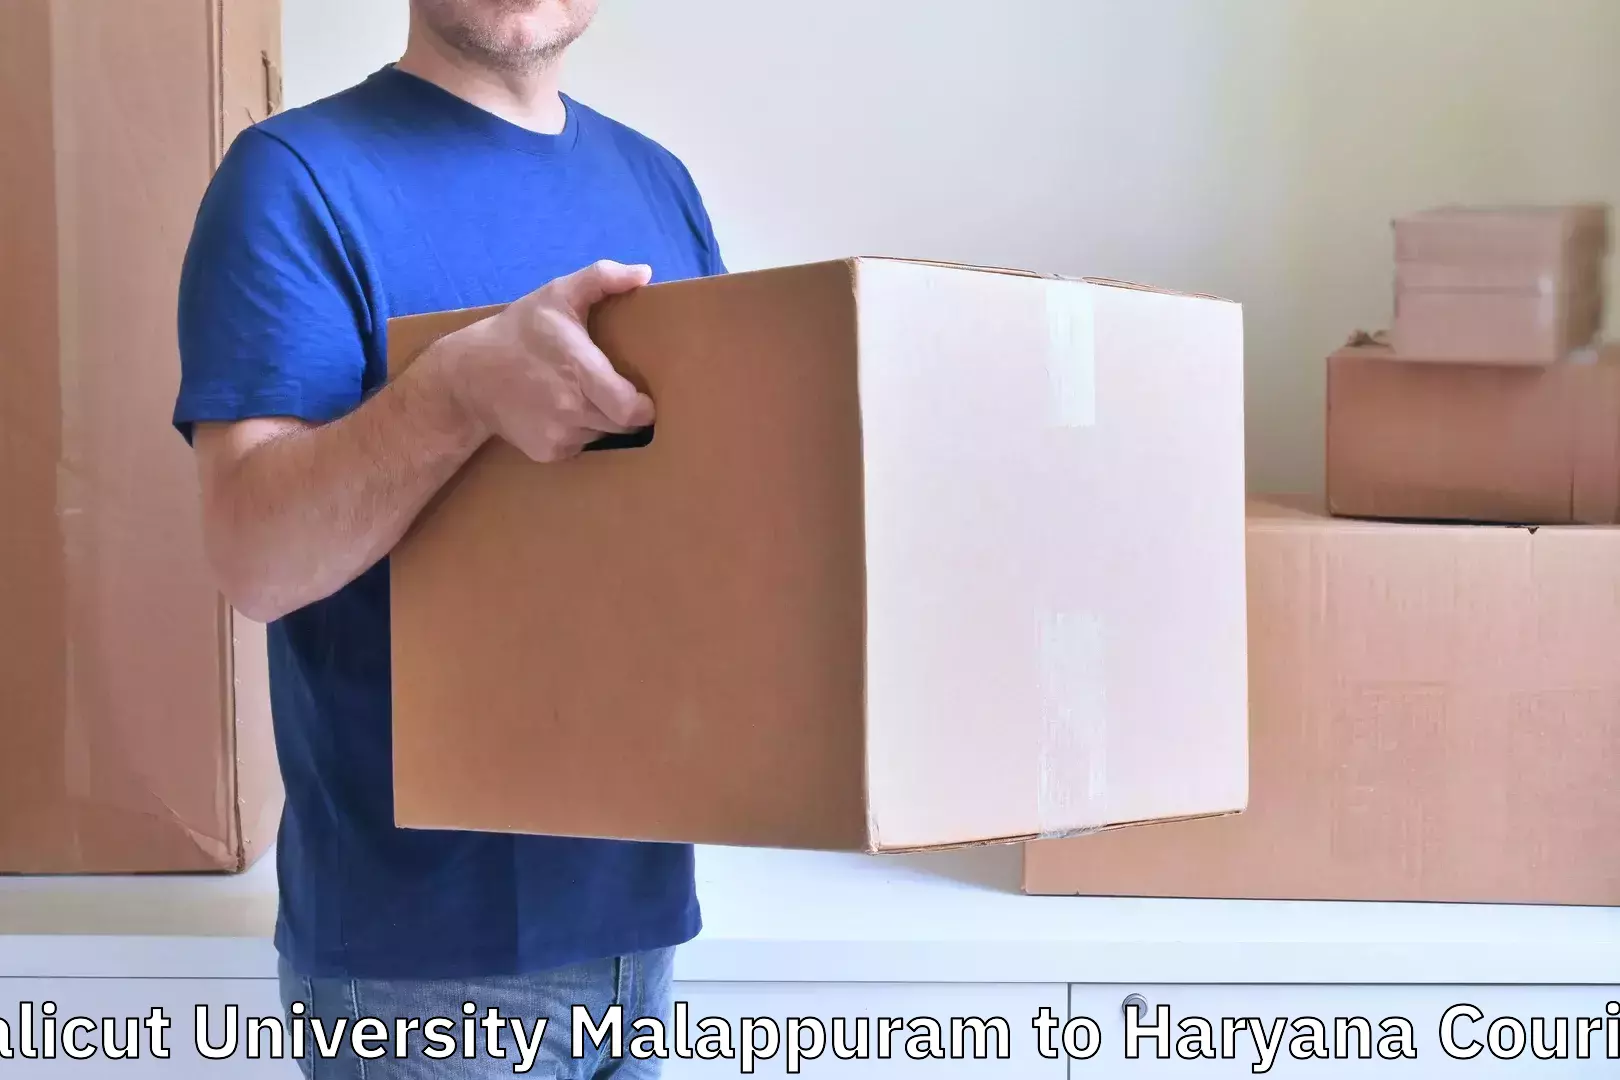 Global baggage shipping in Calicut University Malappuram to Haryana